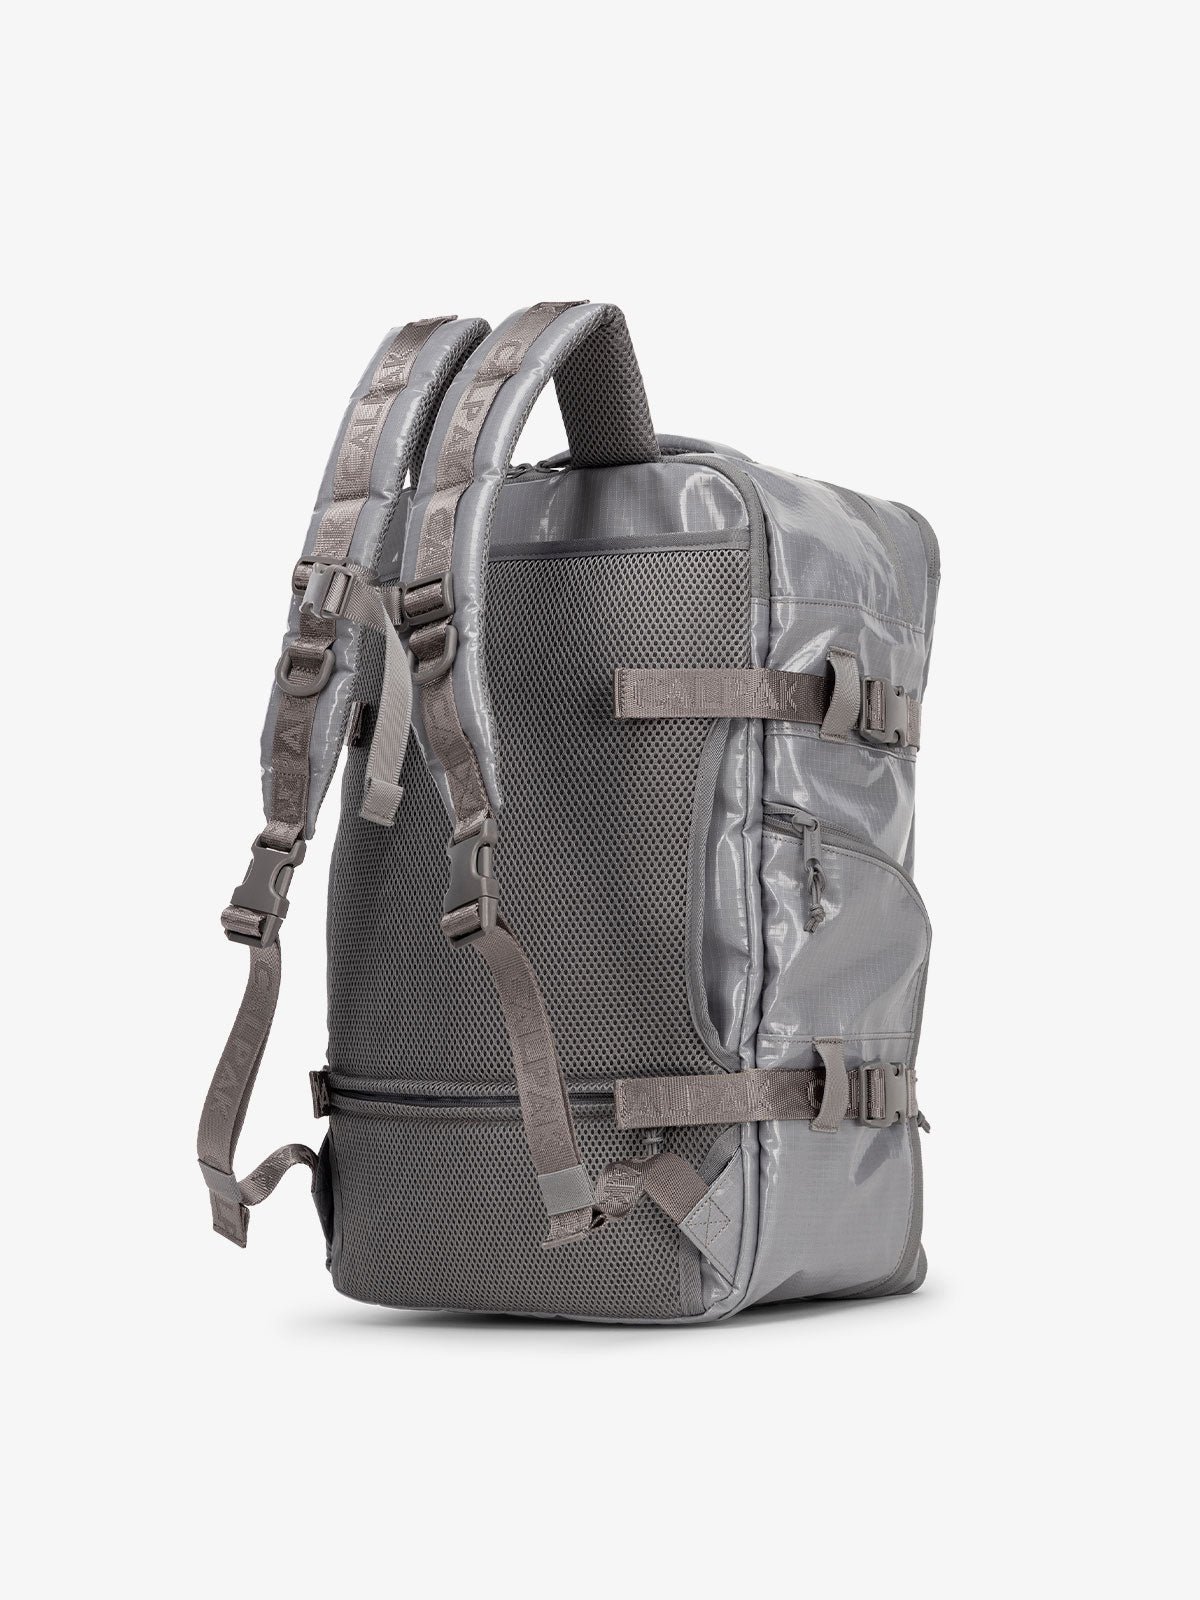 CALPAK Terra 26L Laptop Backpack Duffel with detachable adjustable shoulder strap in gray storm